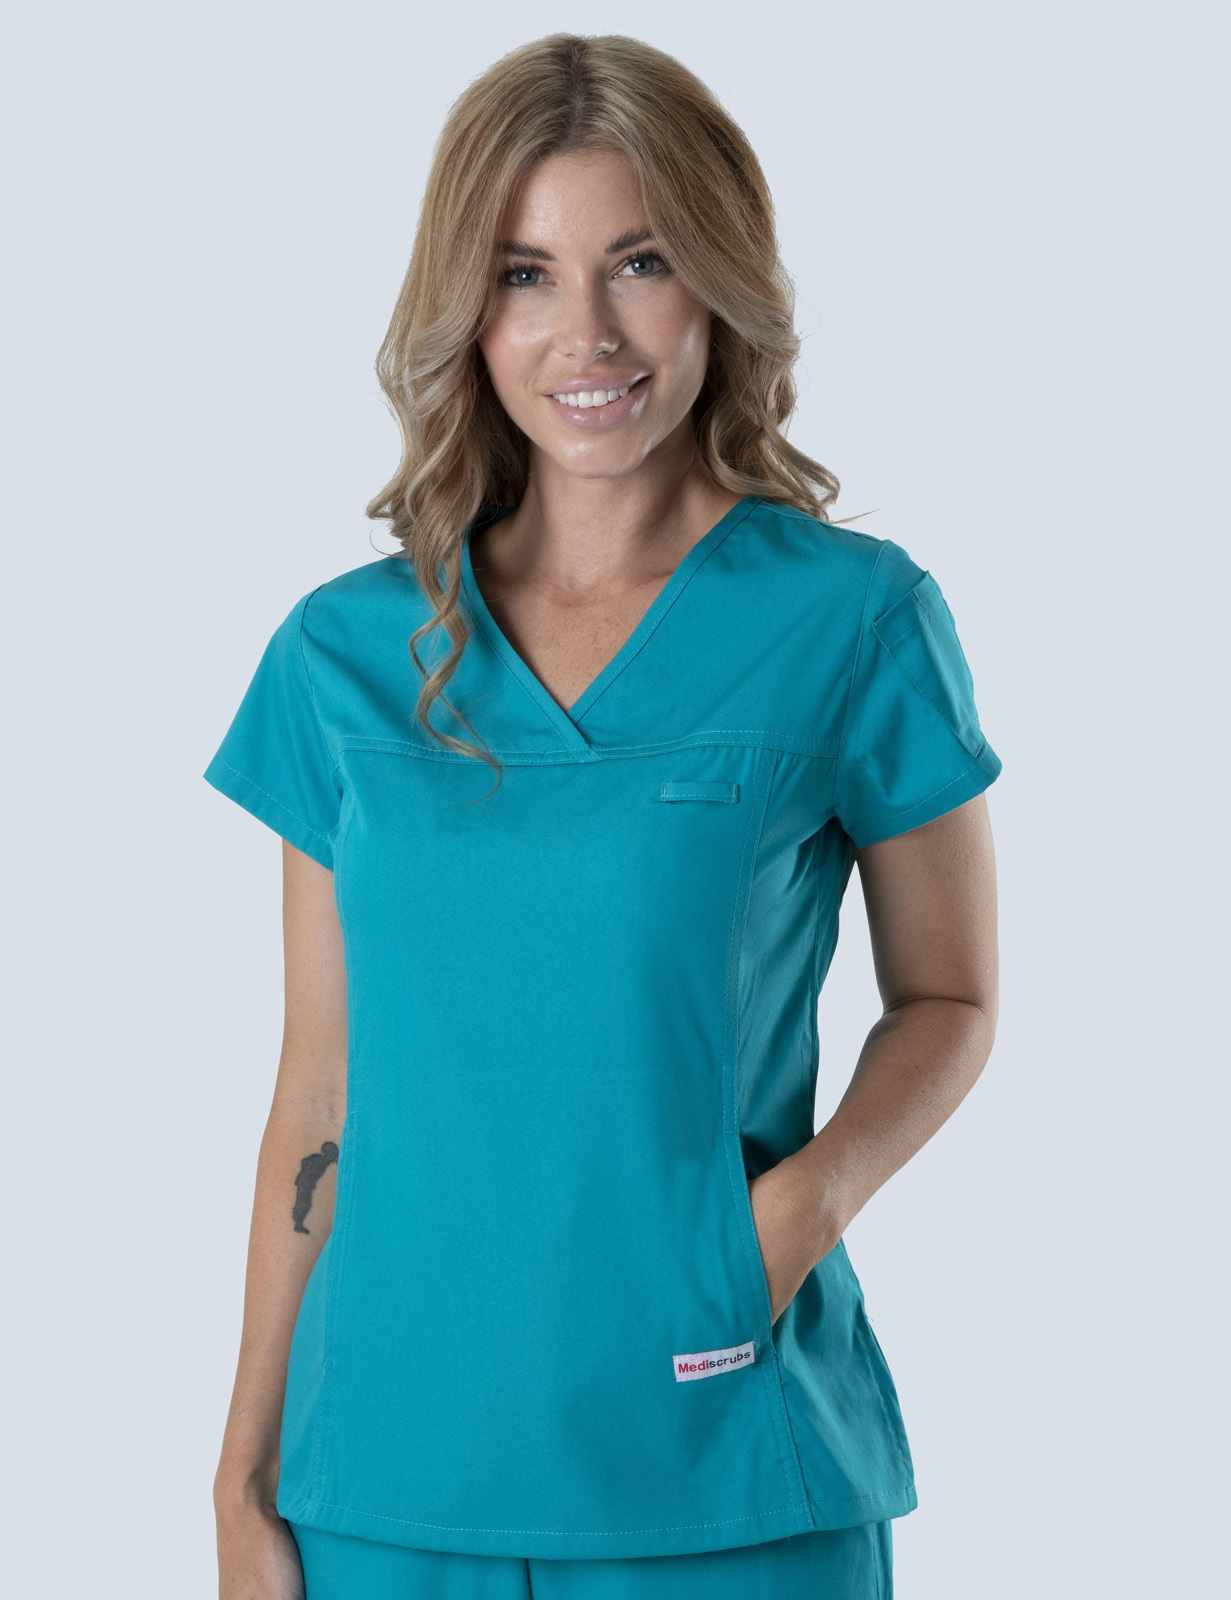 Queensland Children's Hospital Emergency Department Nurse Unit Manager Uniform Top Bundle  (Women's Fit Top in Teal incl Logos)